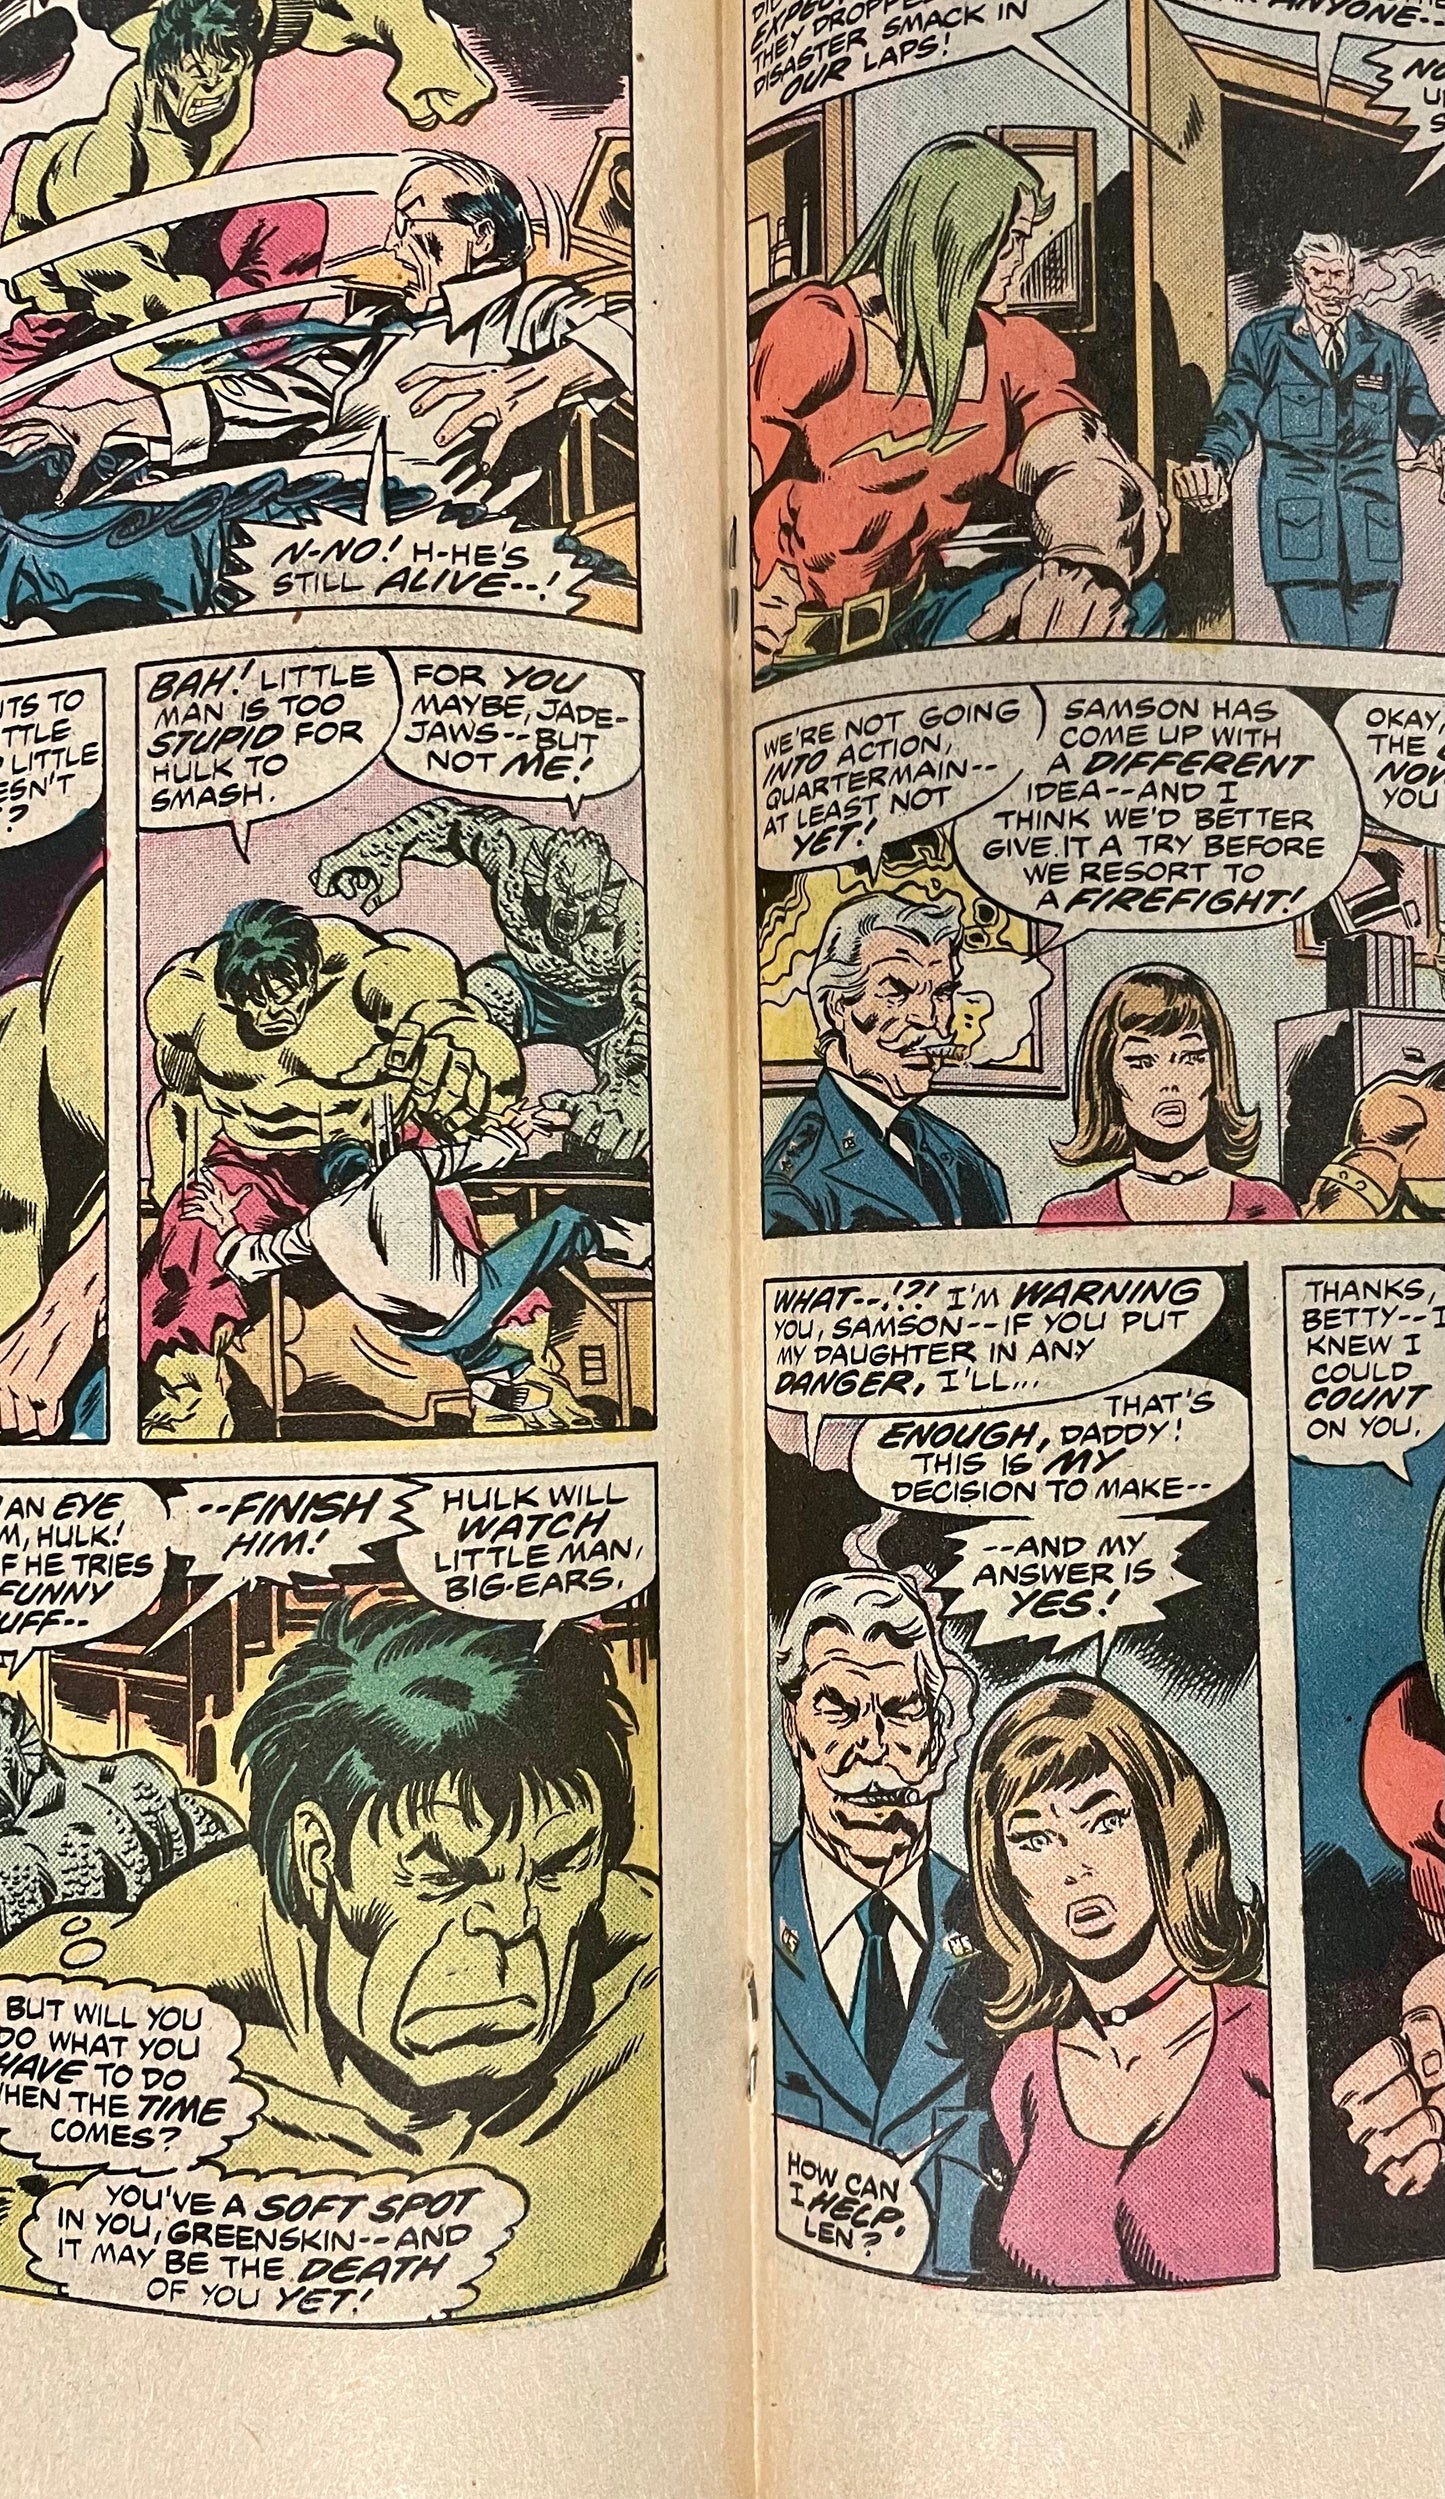 Marvel Comics The Incredible Hulk #196